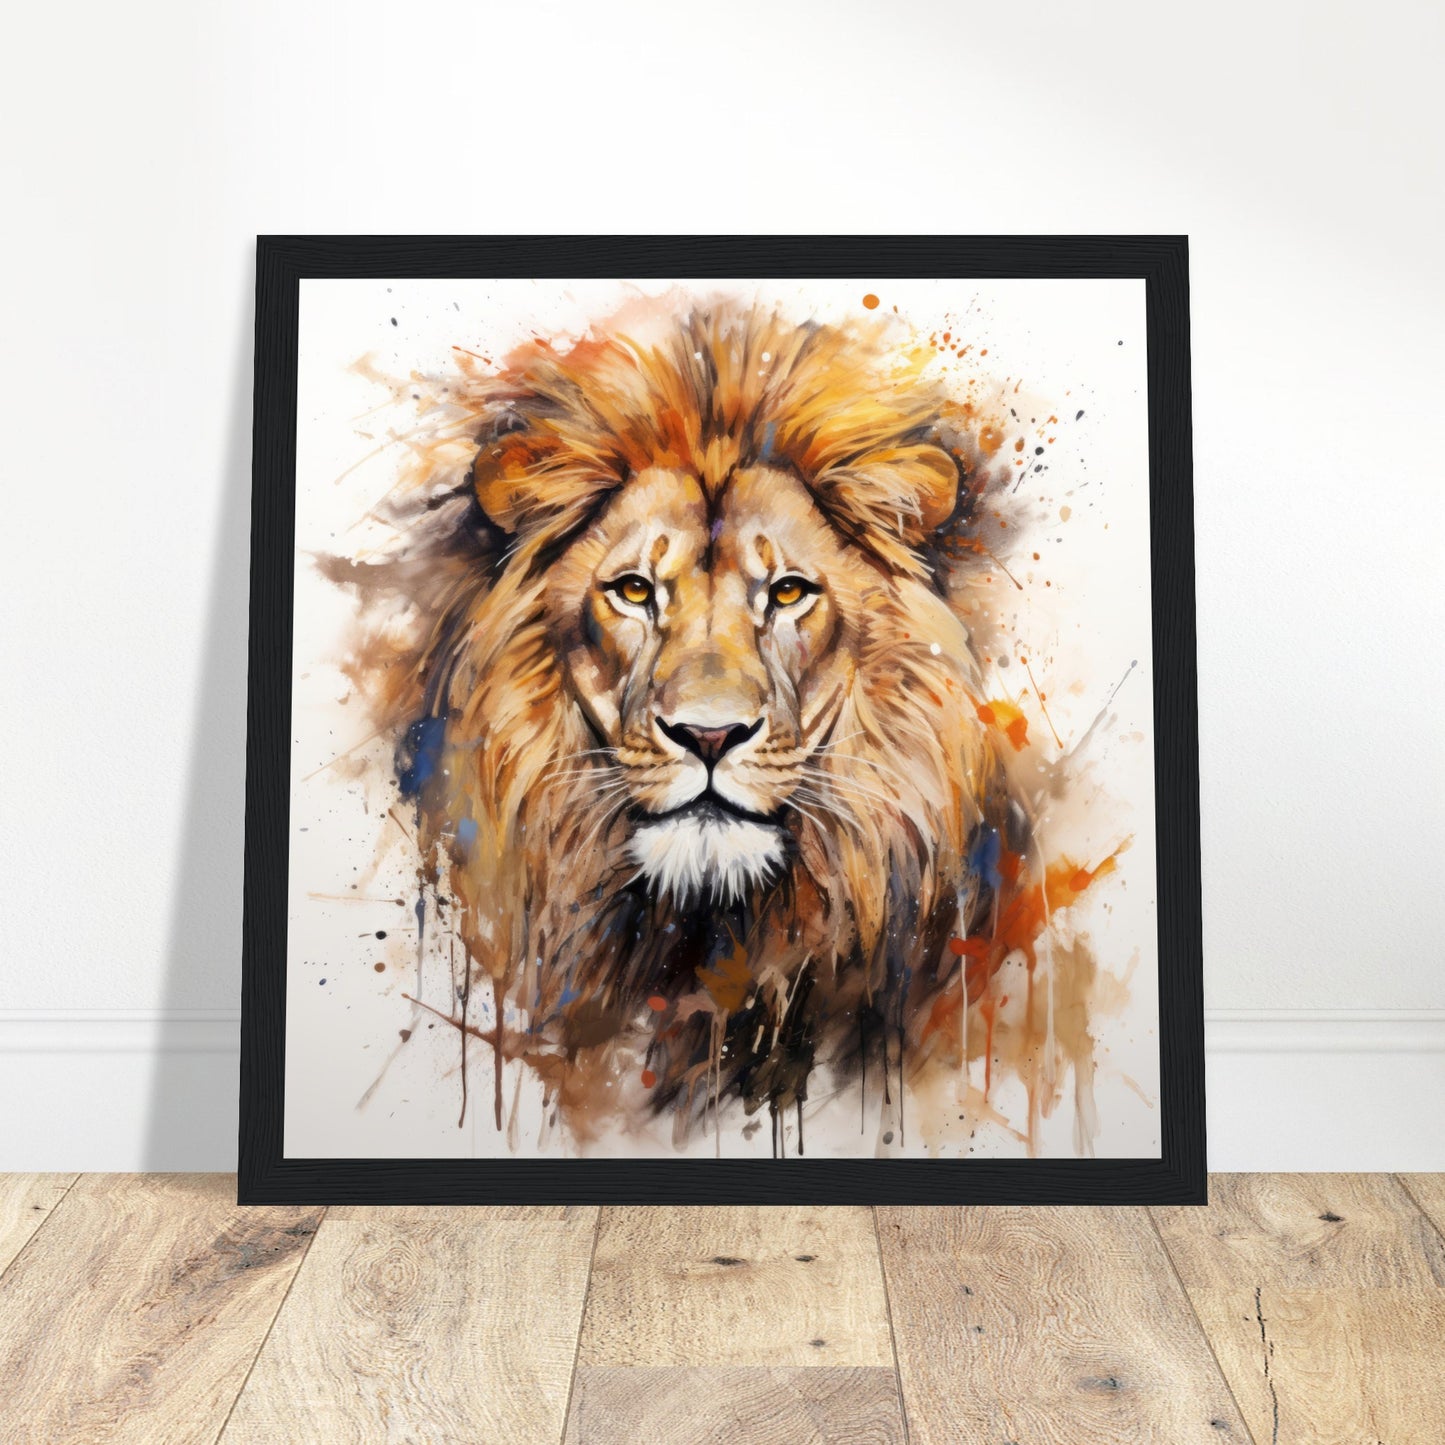 Lion's Roar Art Print - Print Room Ltd Black frame 50x50 cm / 20x20"